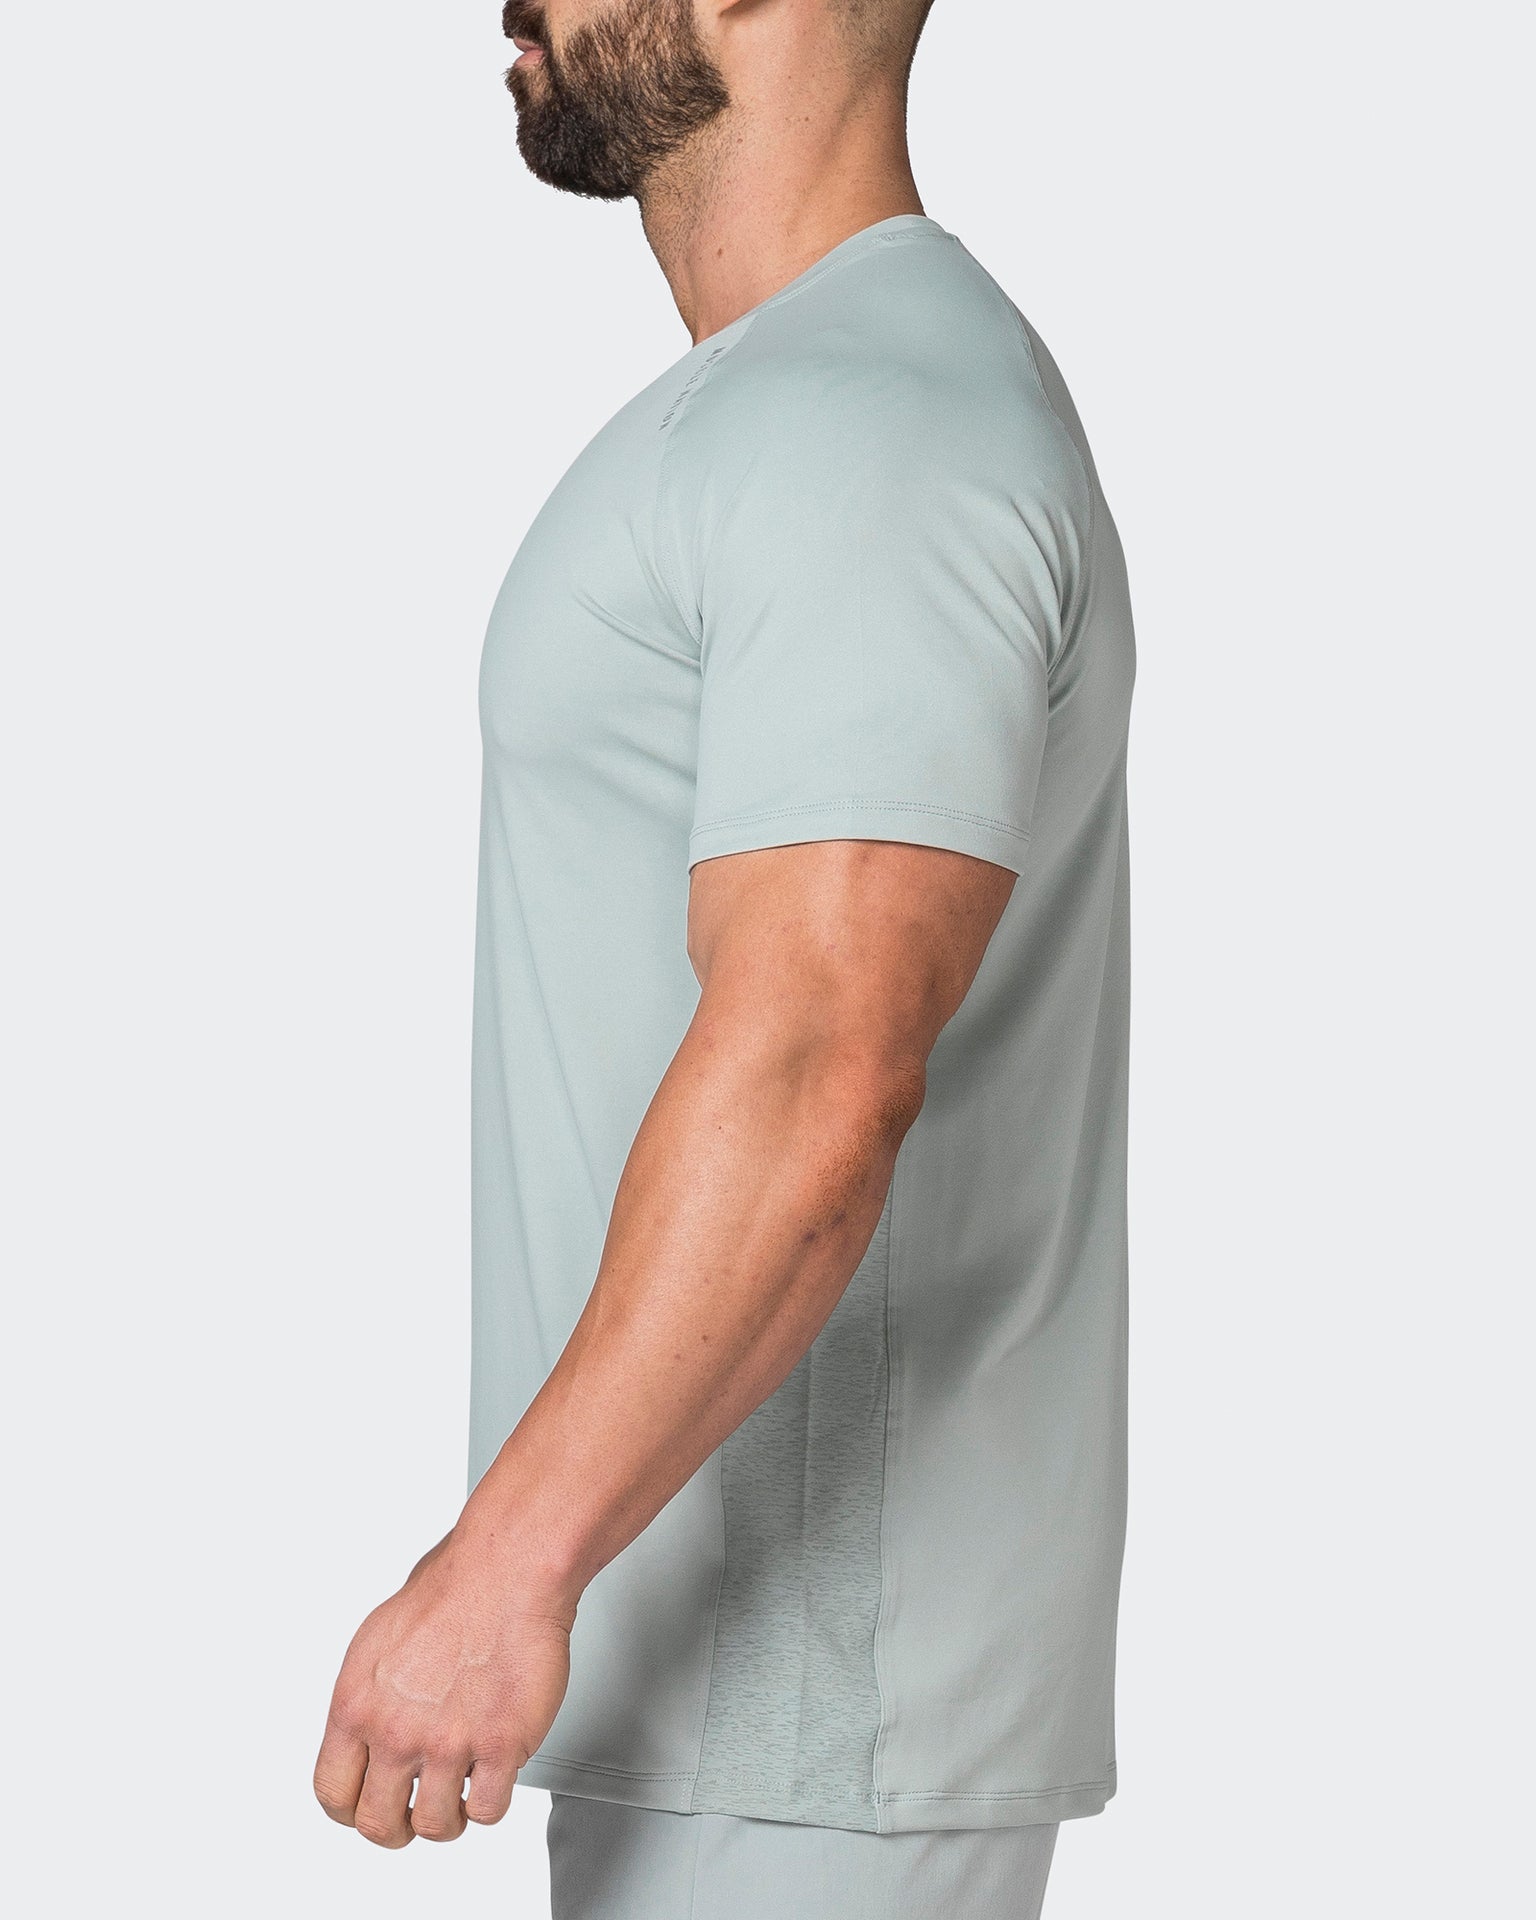 Muscle Nation T-Shirts Reflective Running Tee - Foam